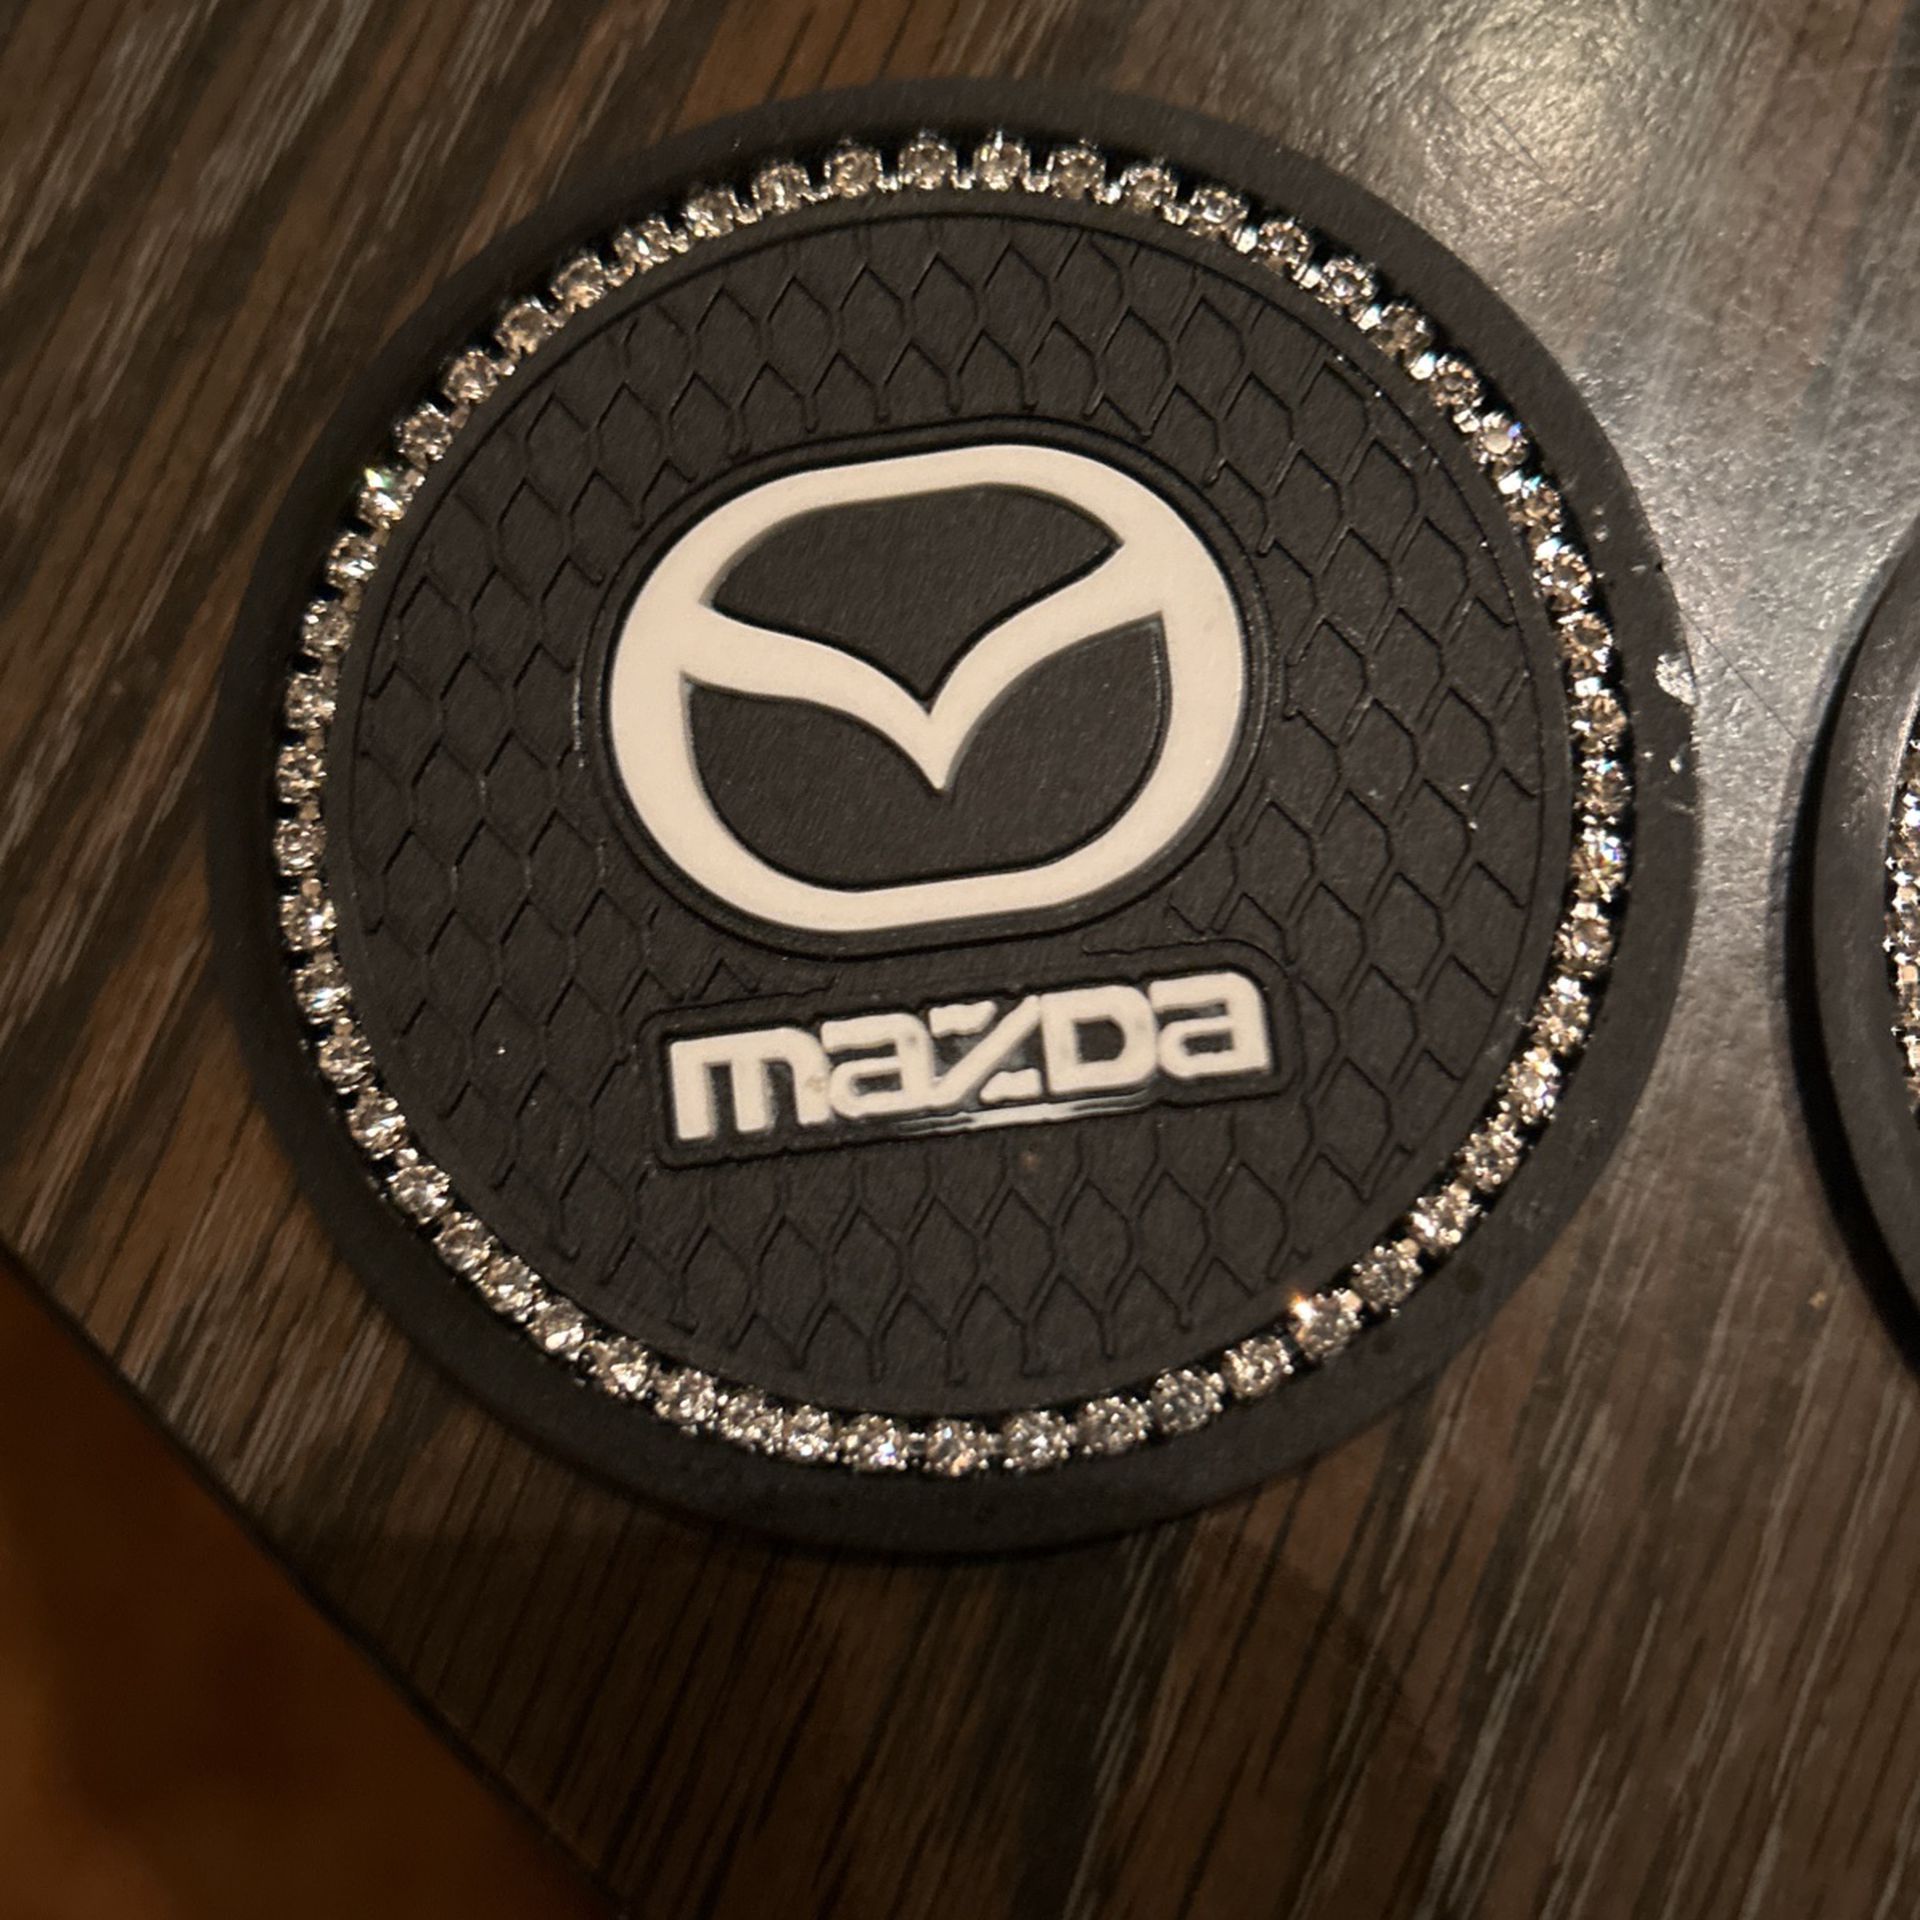 Mazda Drink Coasters